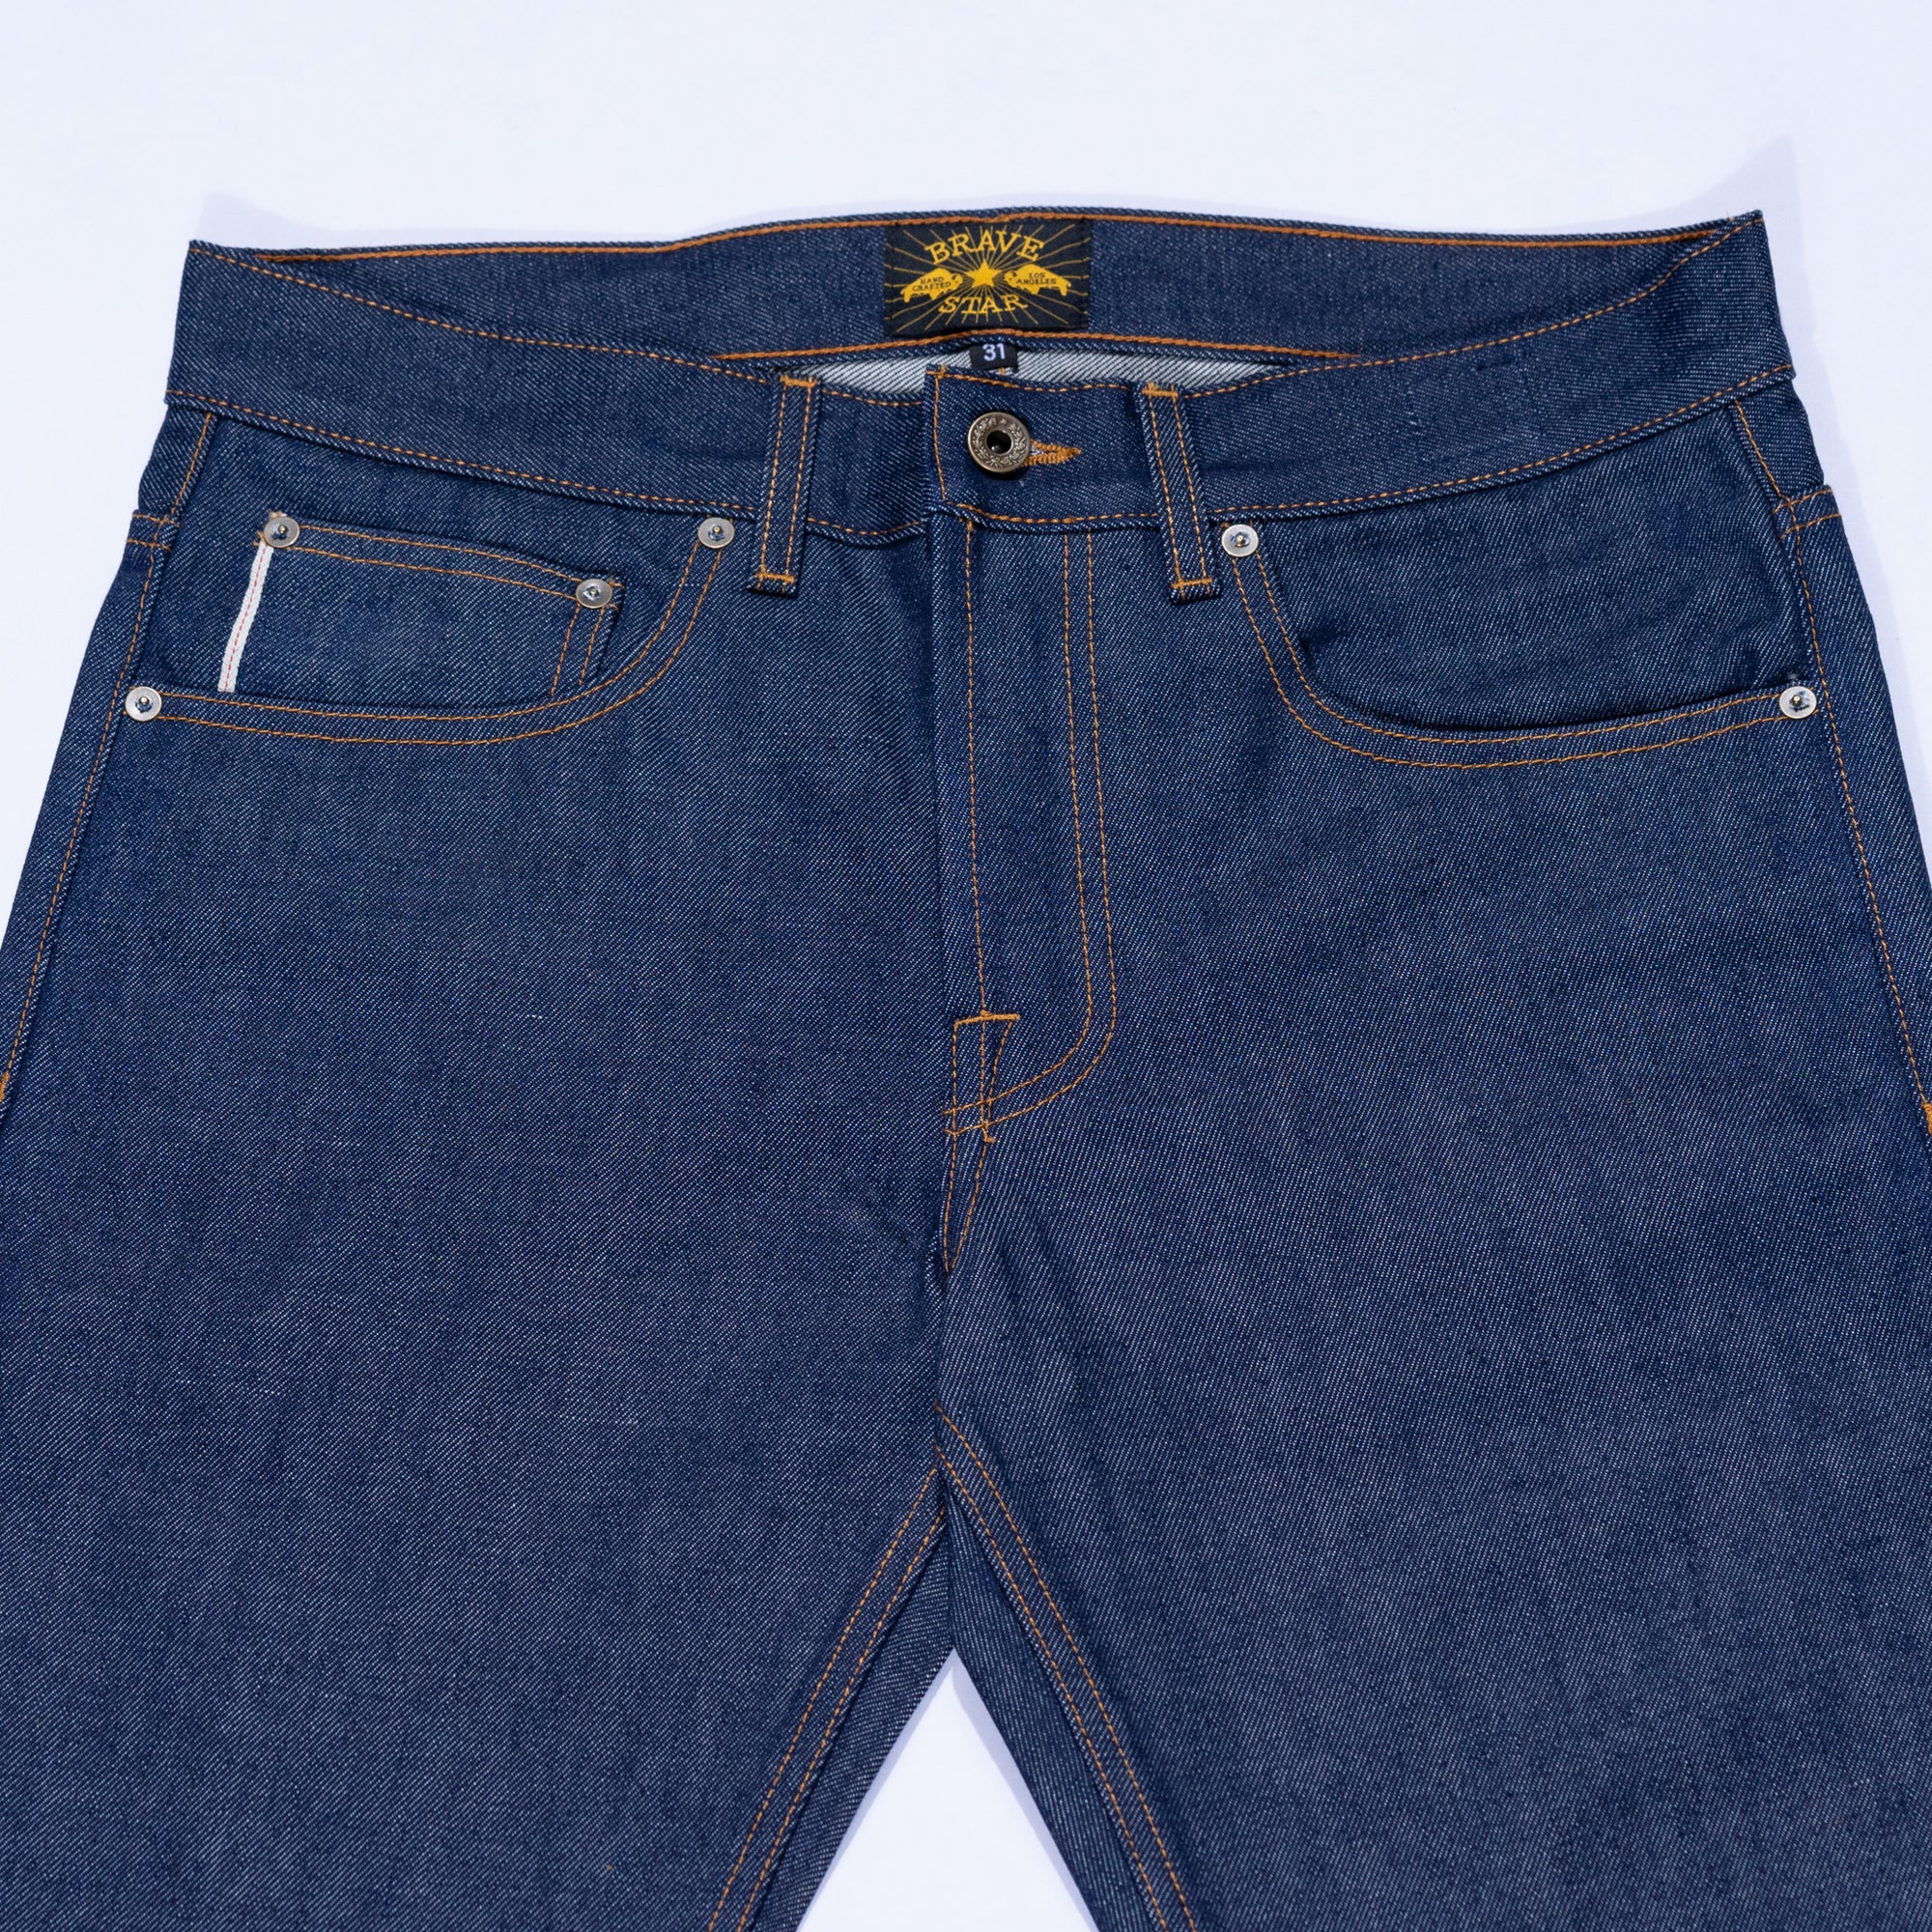 Brave Star Selvedge Cone Mills Raw Selvedge Denim Jeans Size 31